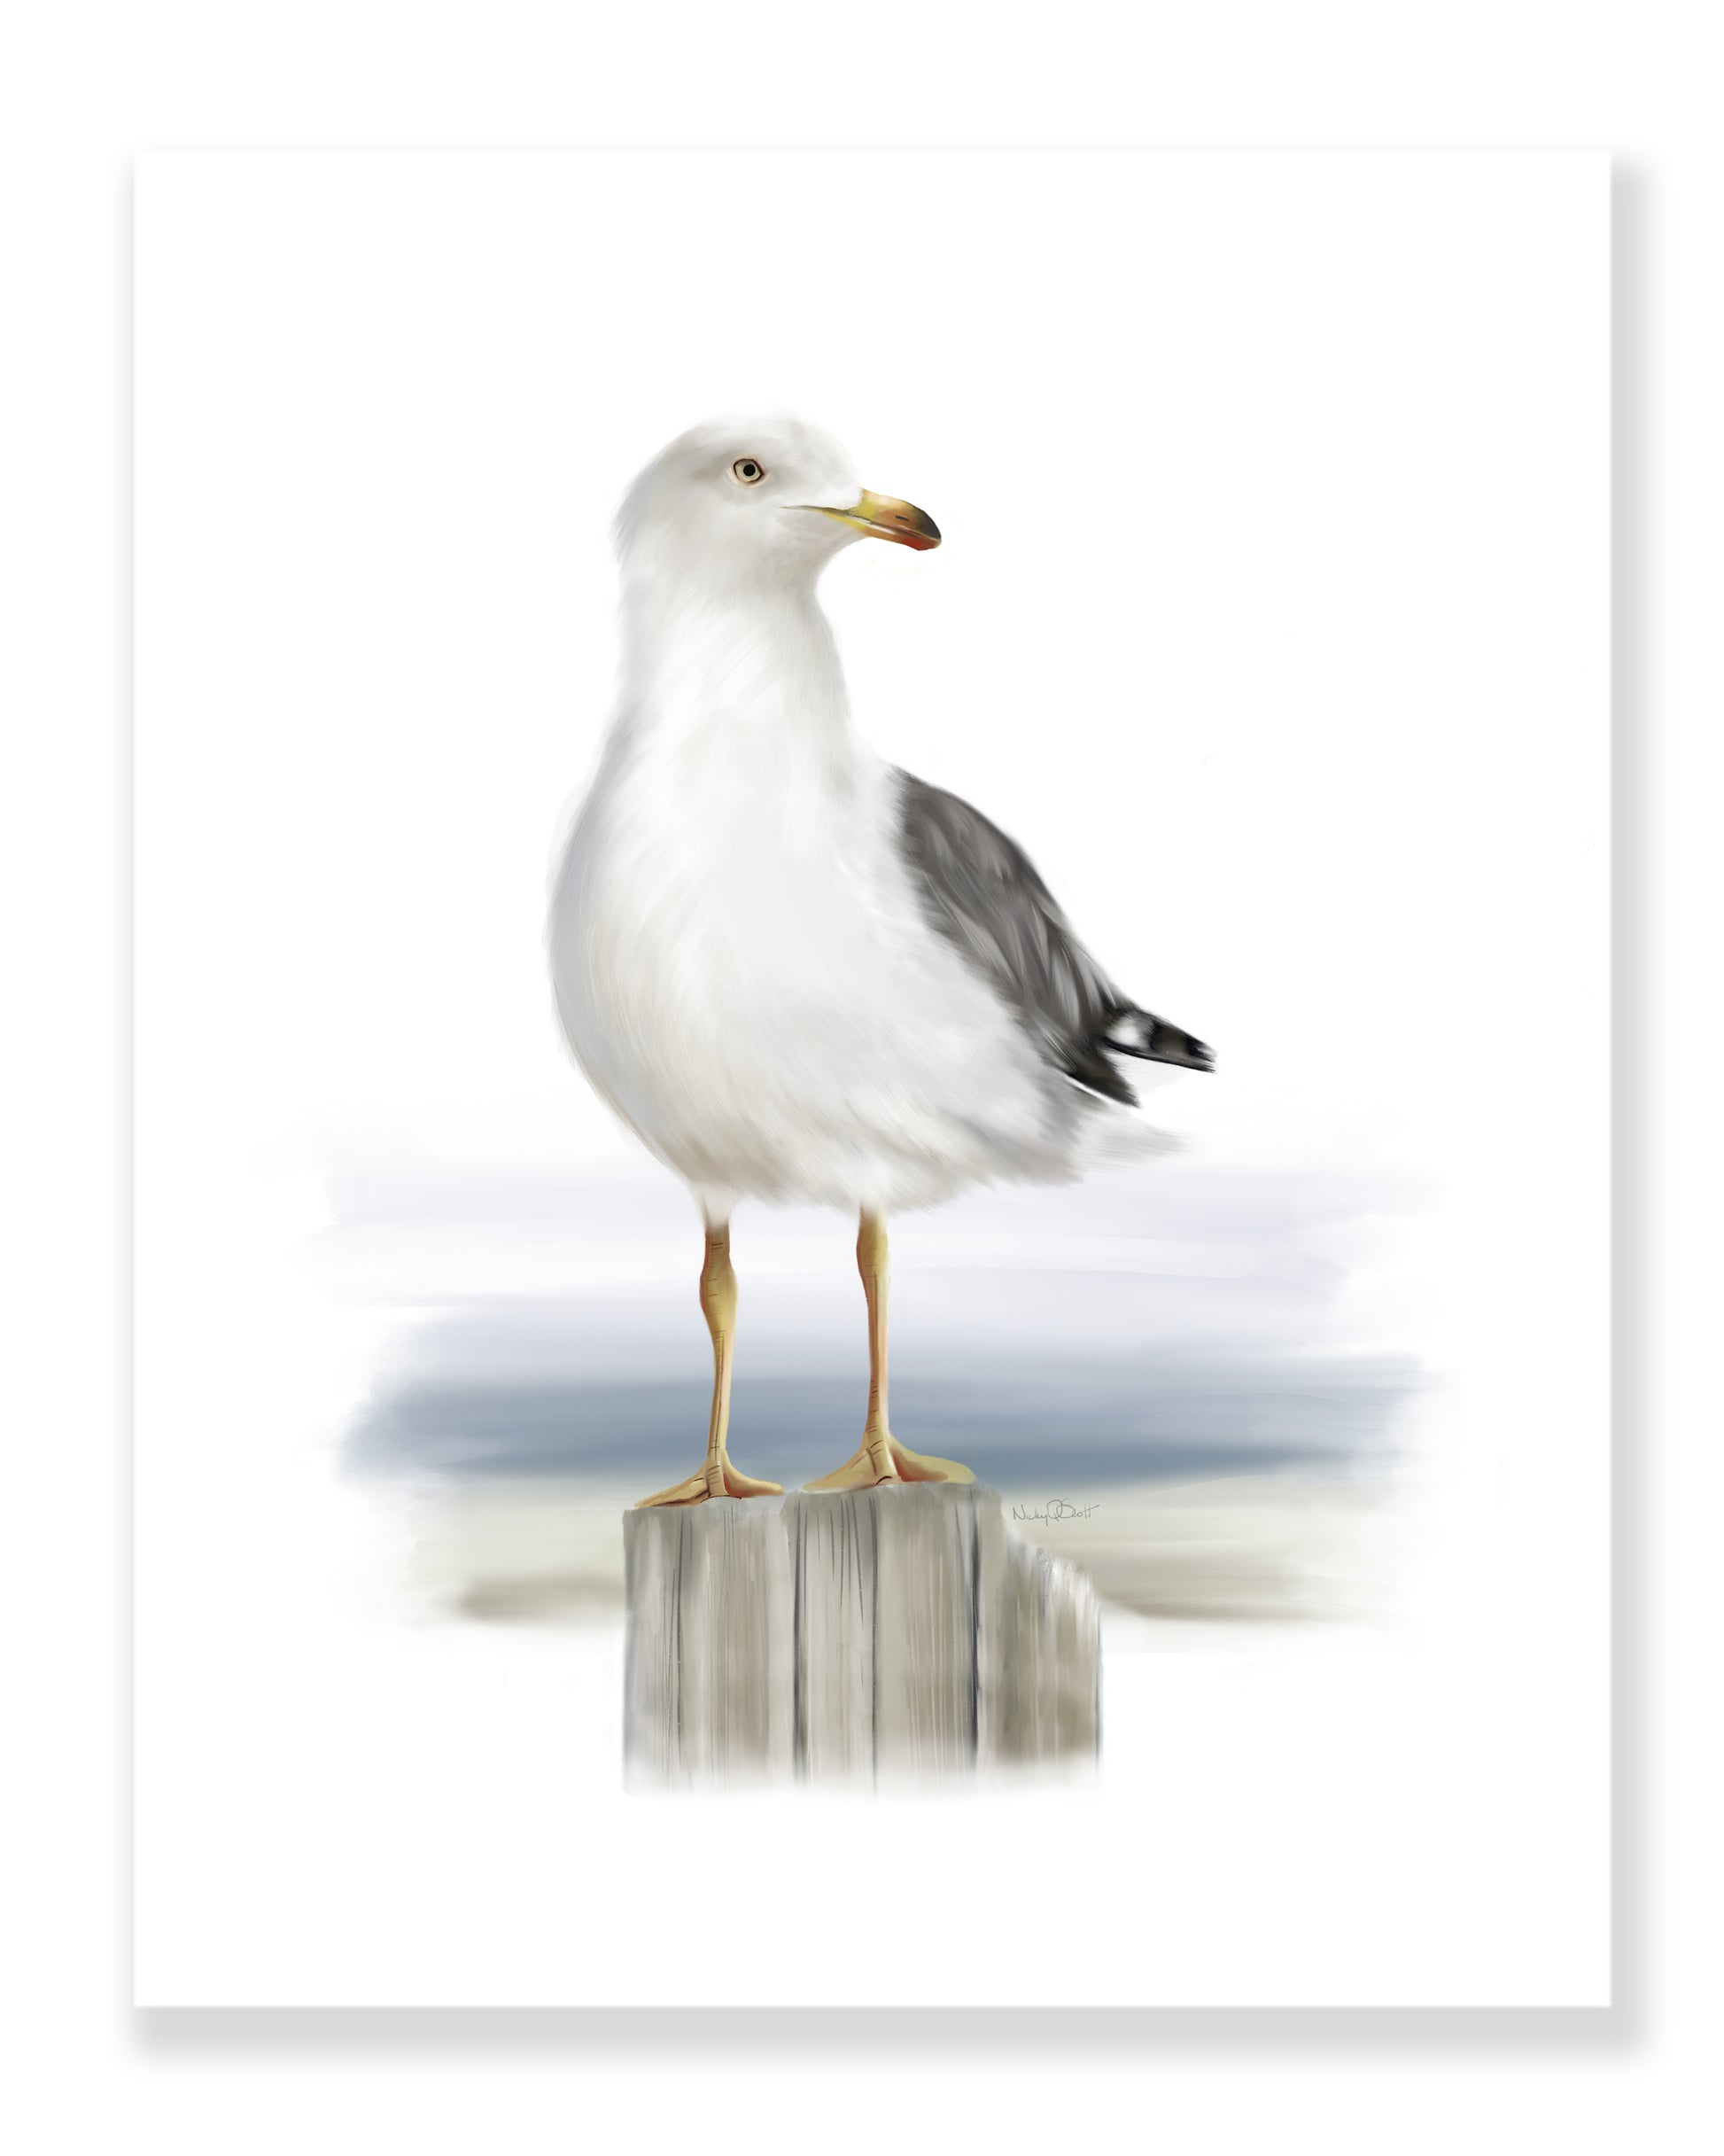 Seagull Standing on Wood Art Print - Studio Q - Art by Nicky Quartermaine Scott